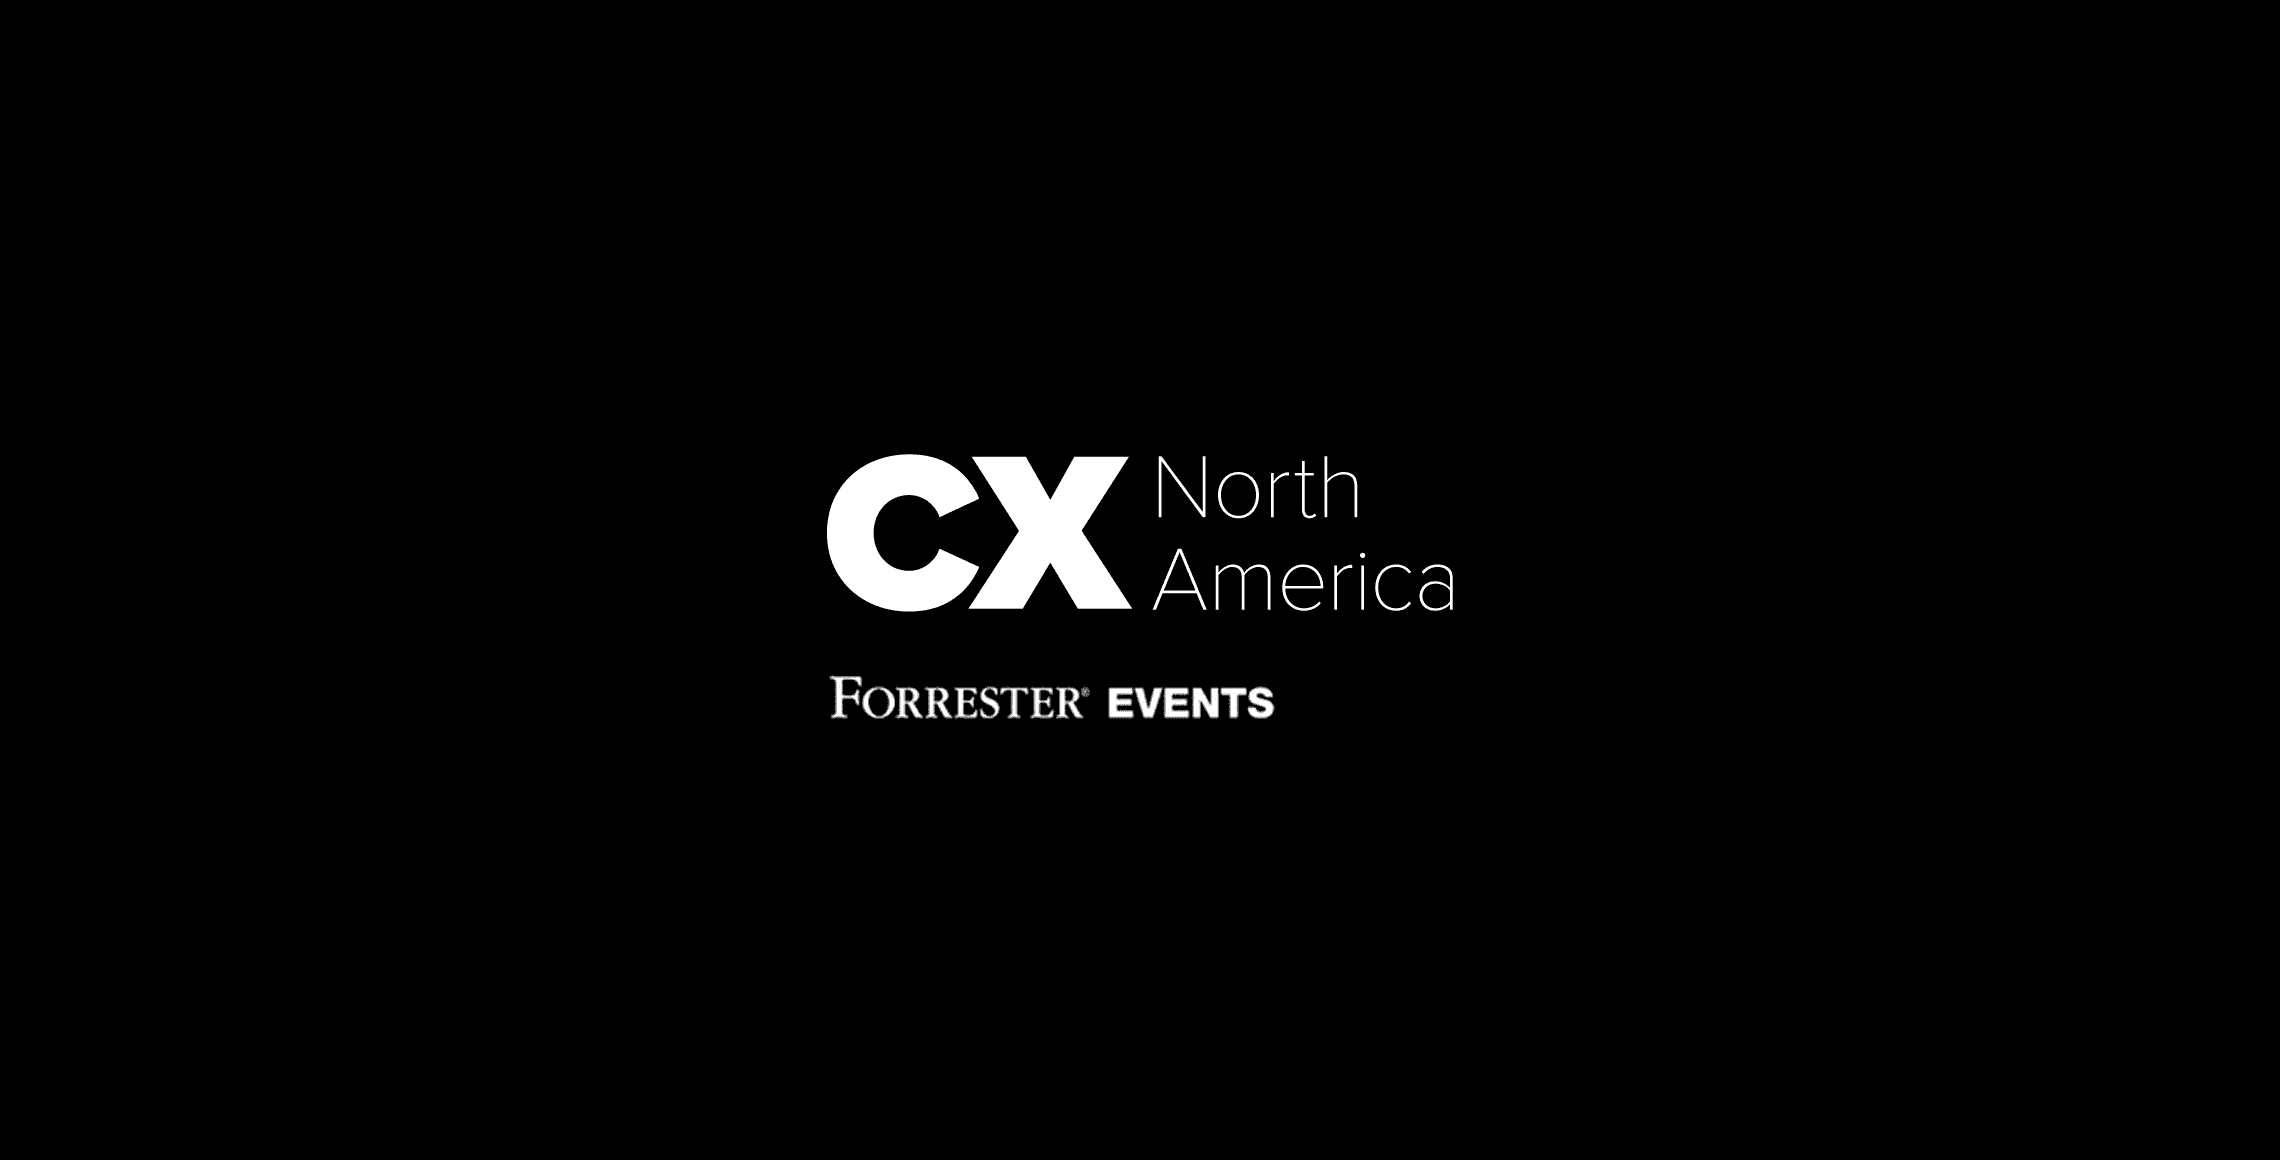 Digital Events Forrester Cx North America